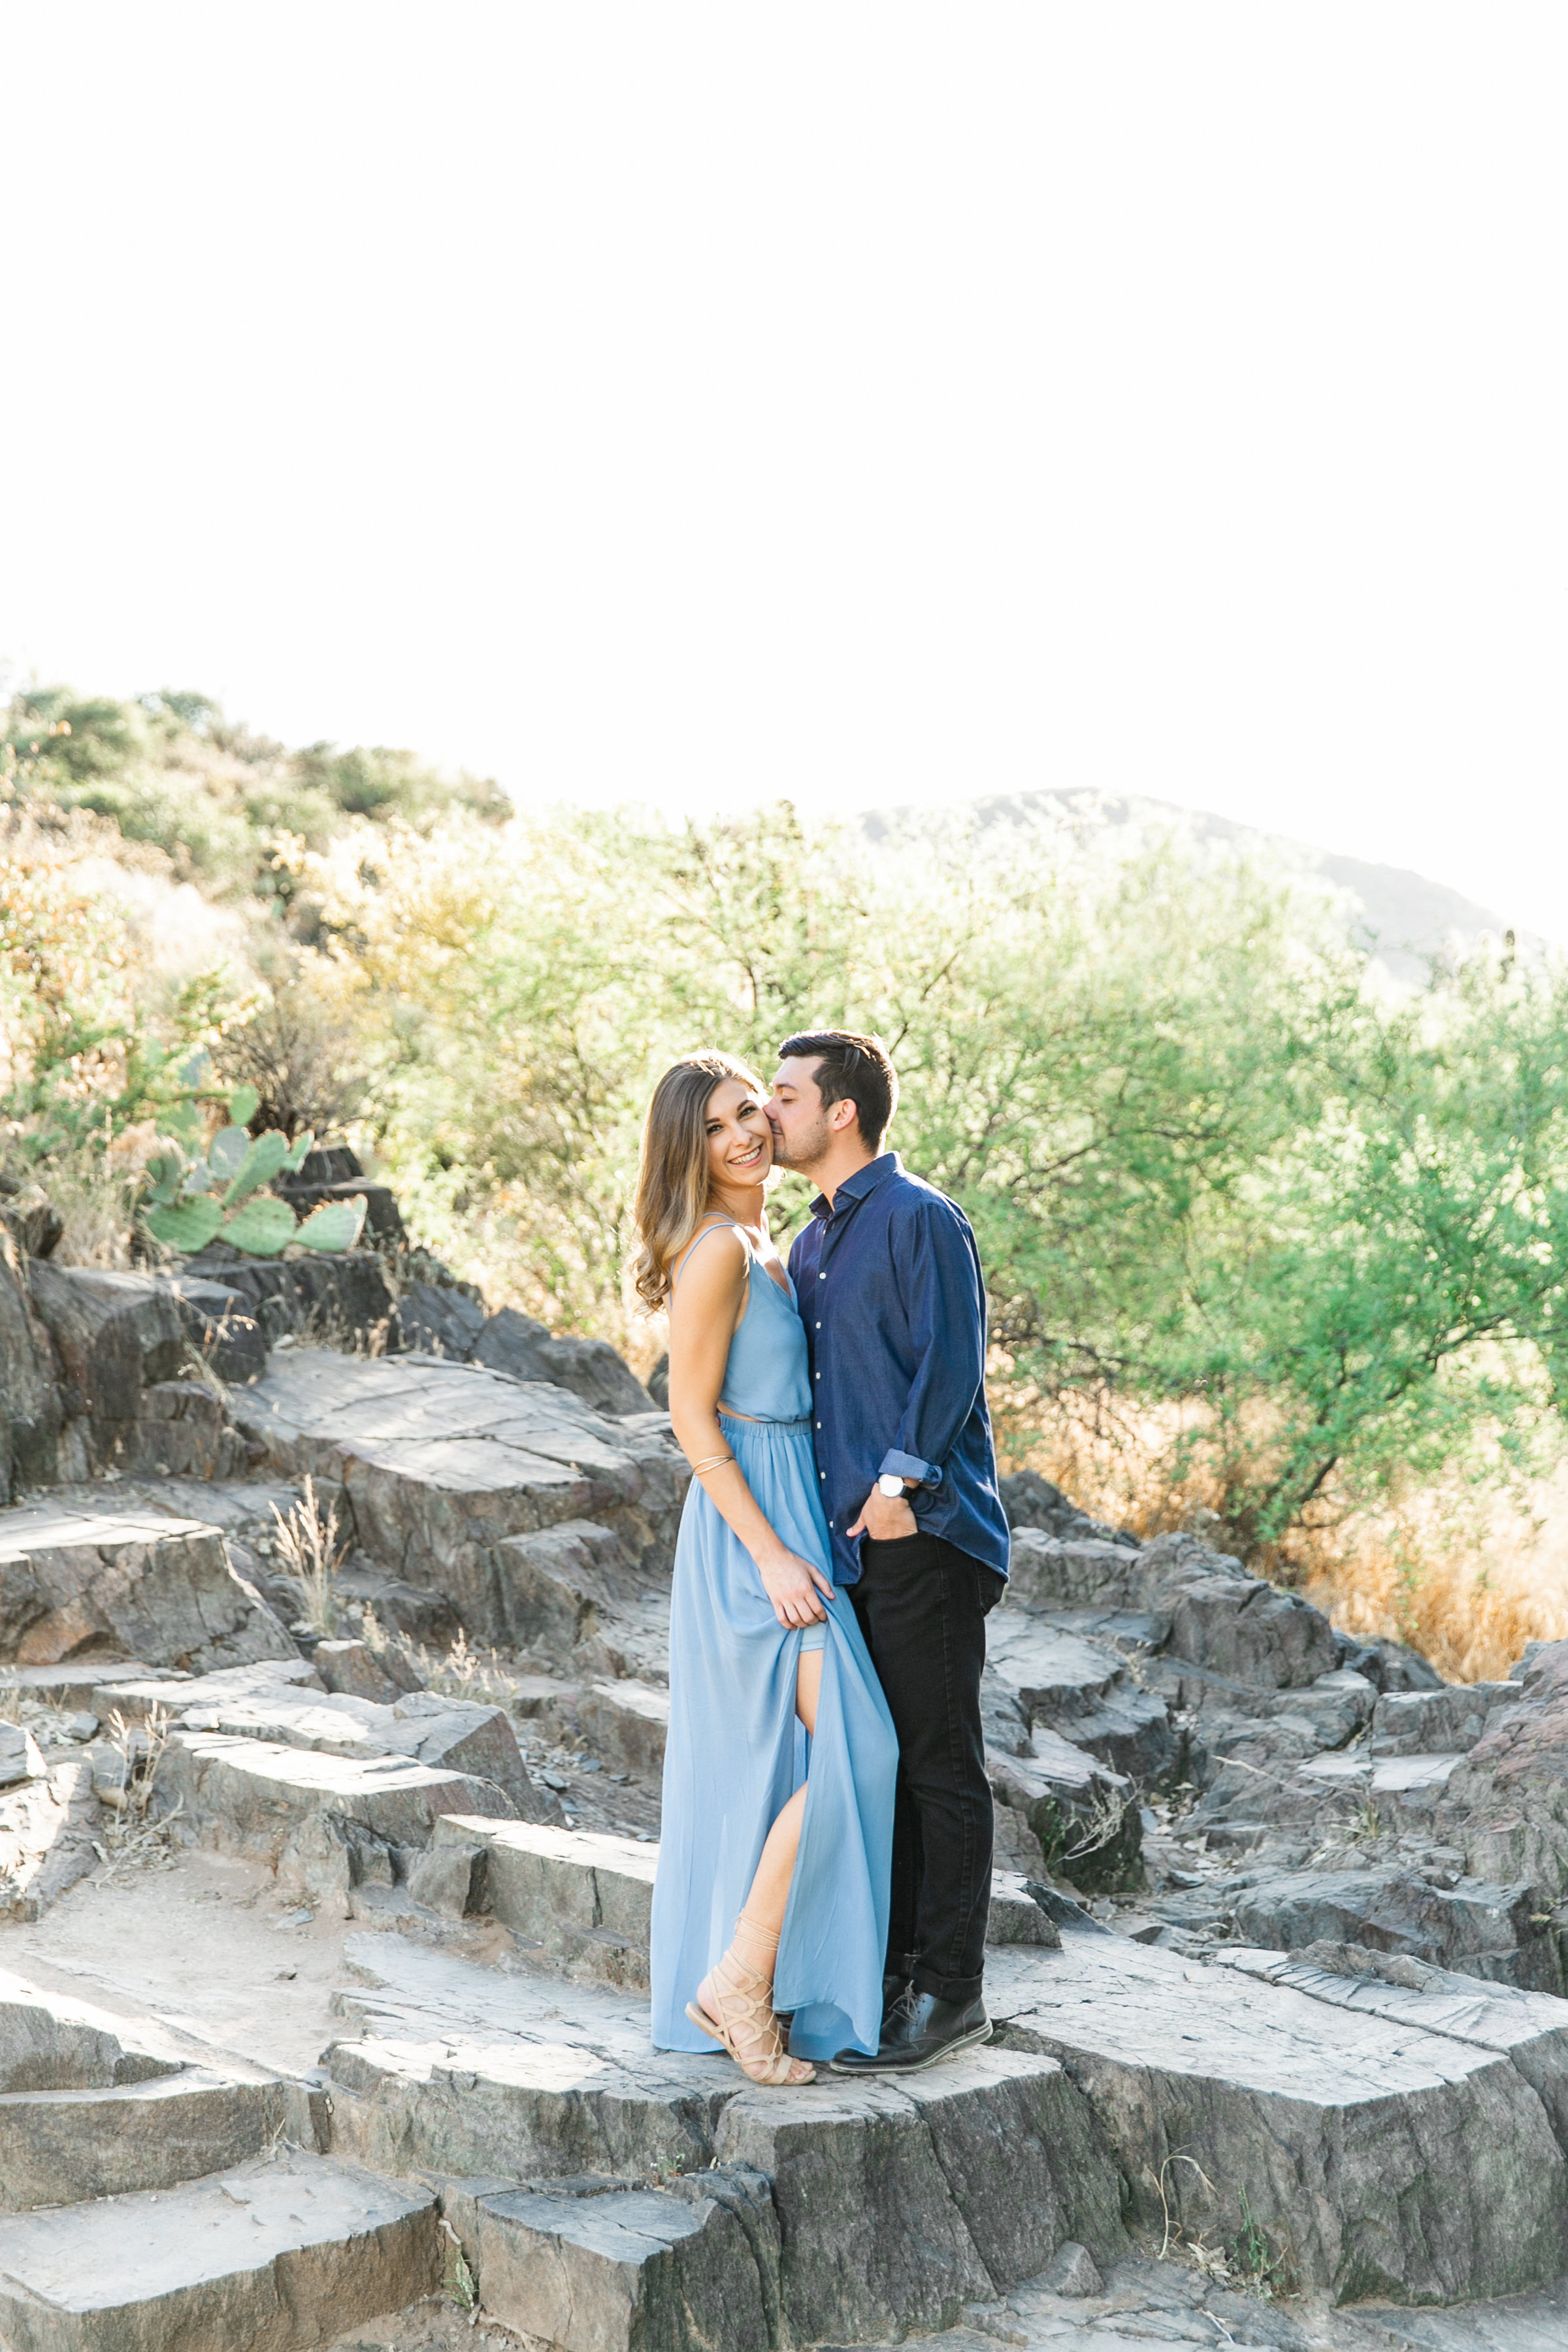 Karlie Colleen Photography - Arizona Desert Engagement - Brynne & Josh -4